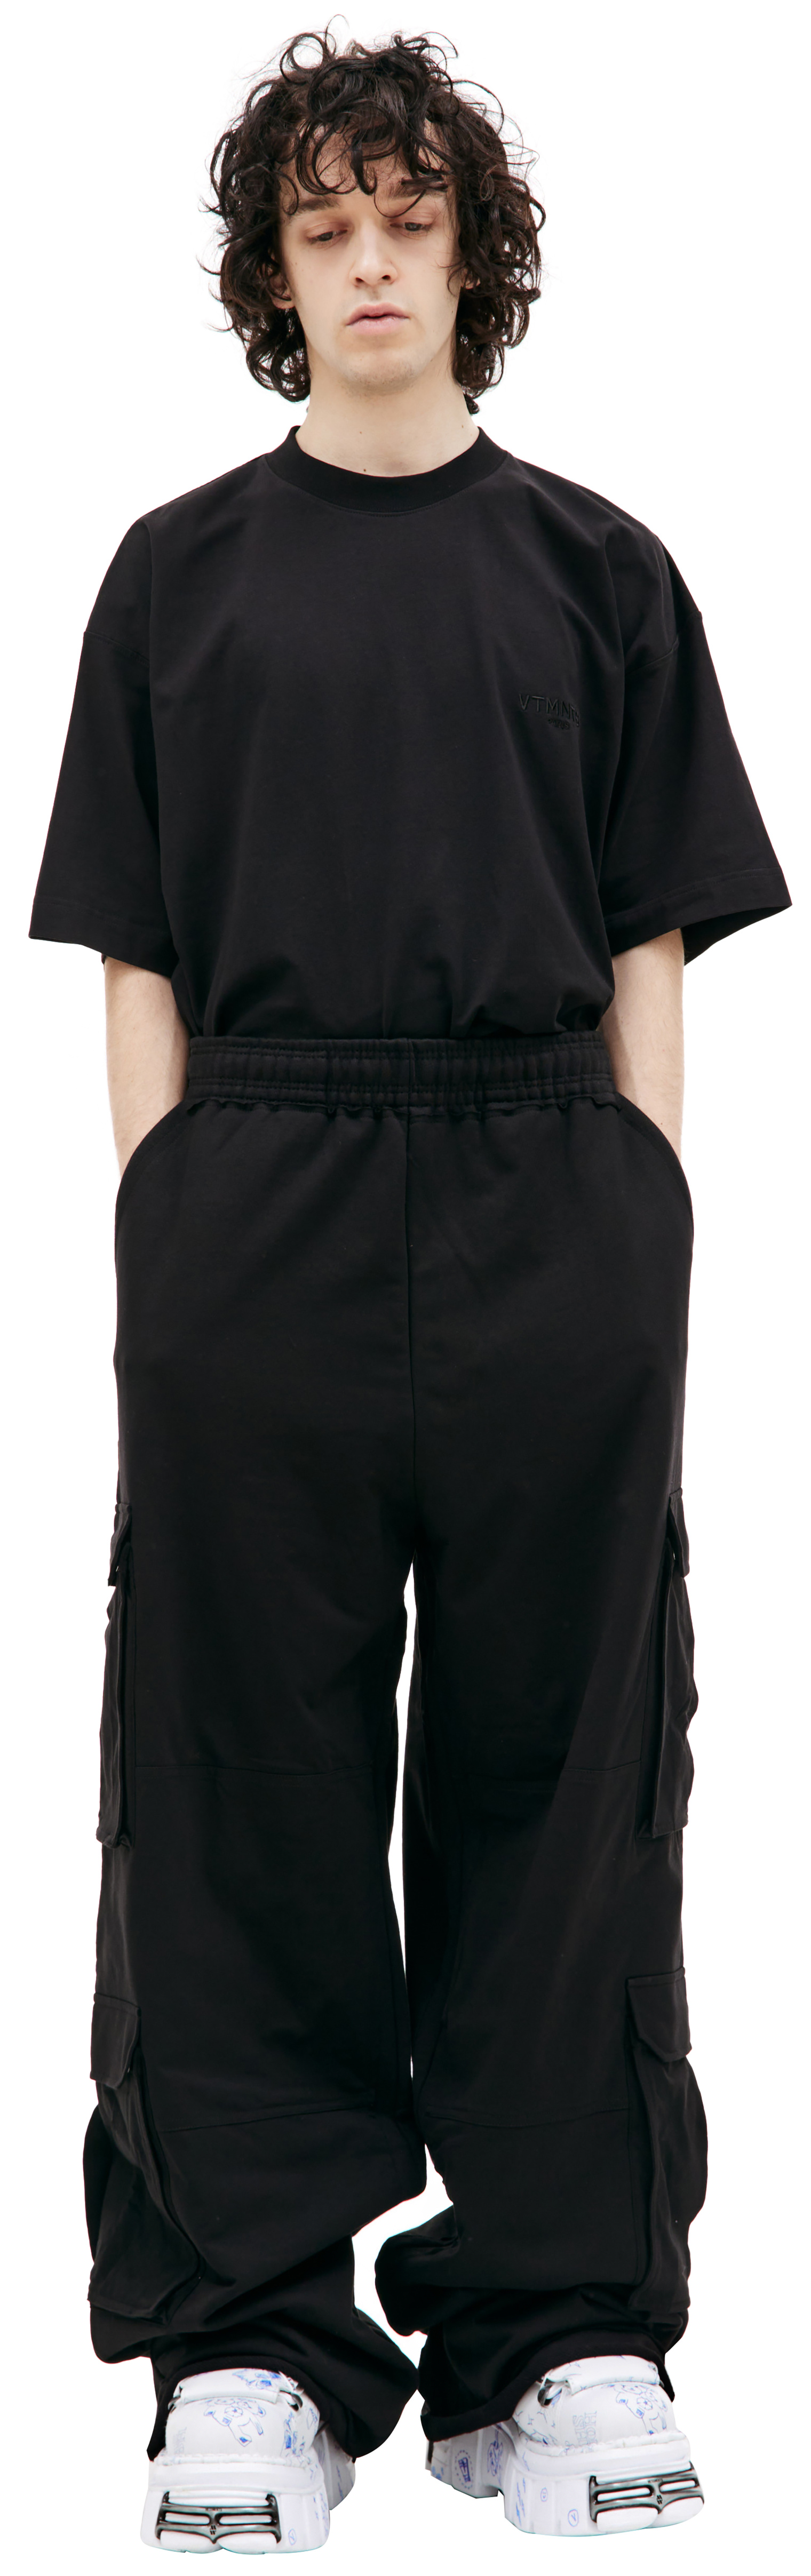 Cotton cargo pants in black - Vetements